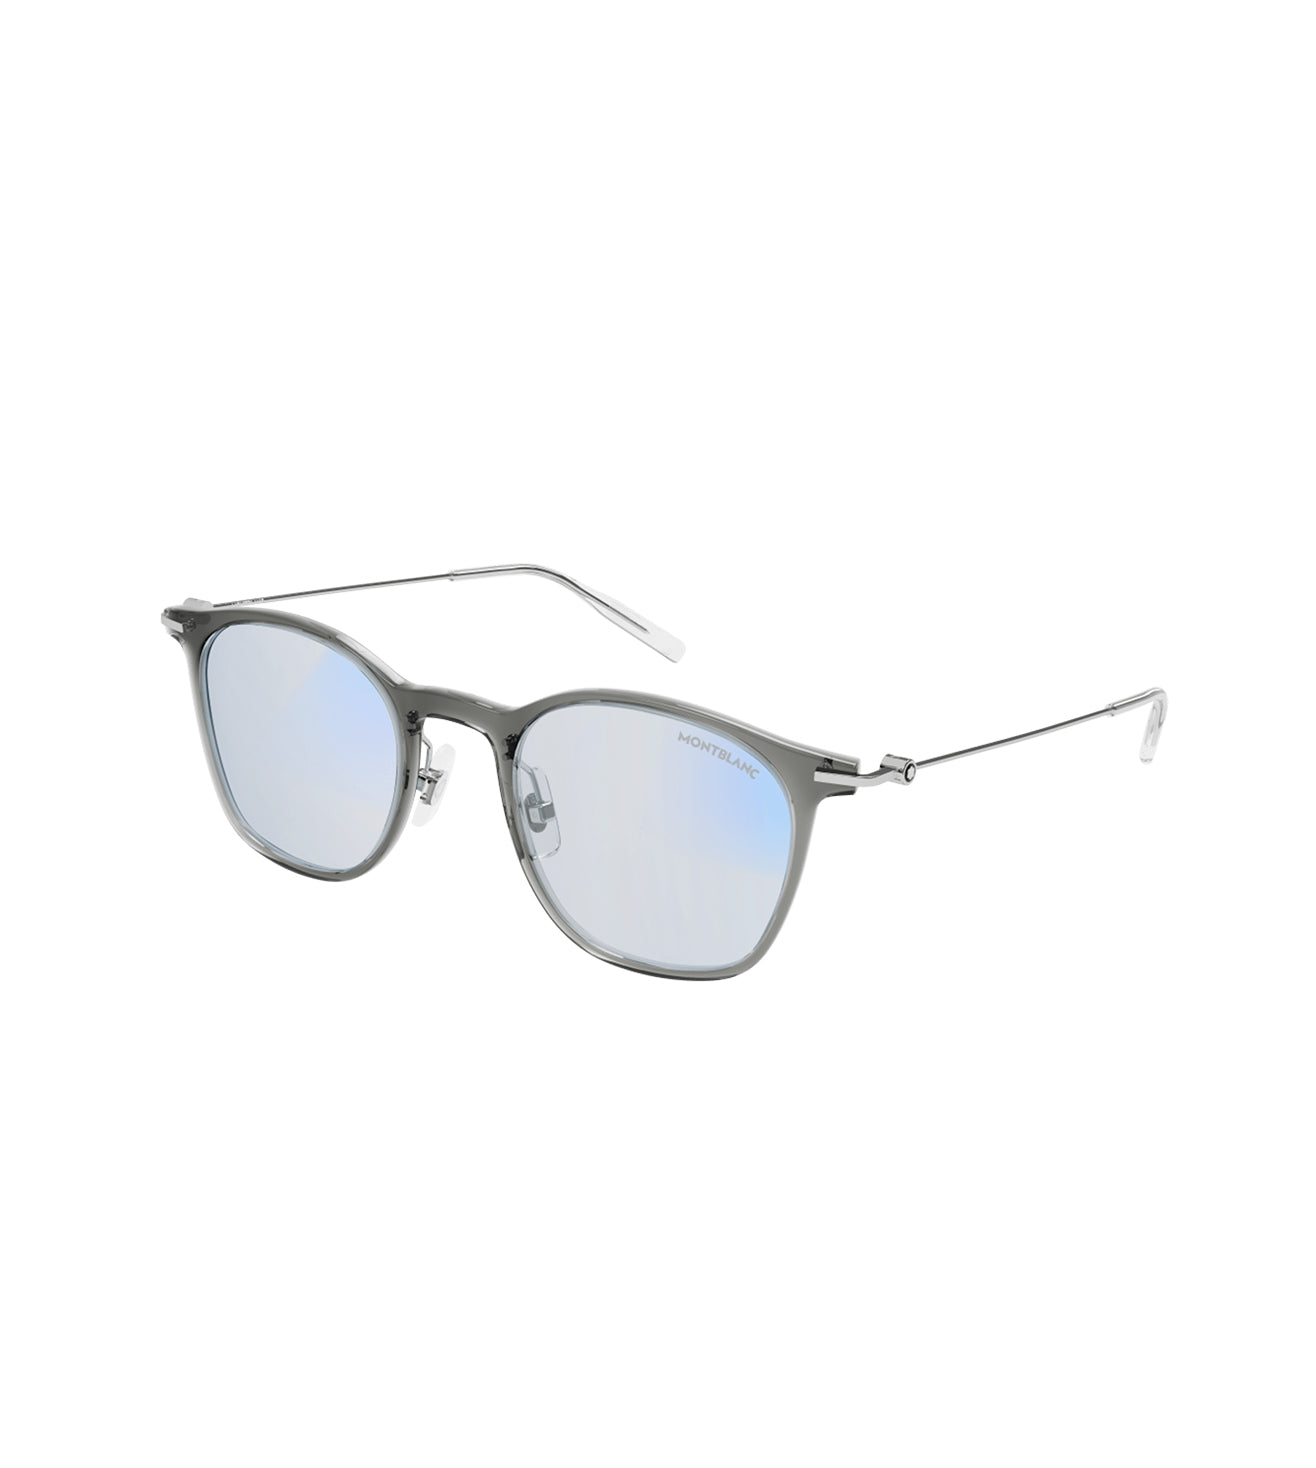 Montblanc Men's Light Blue Round Sunglasses